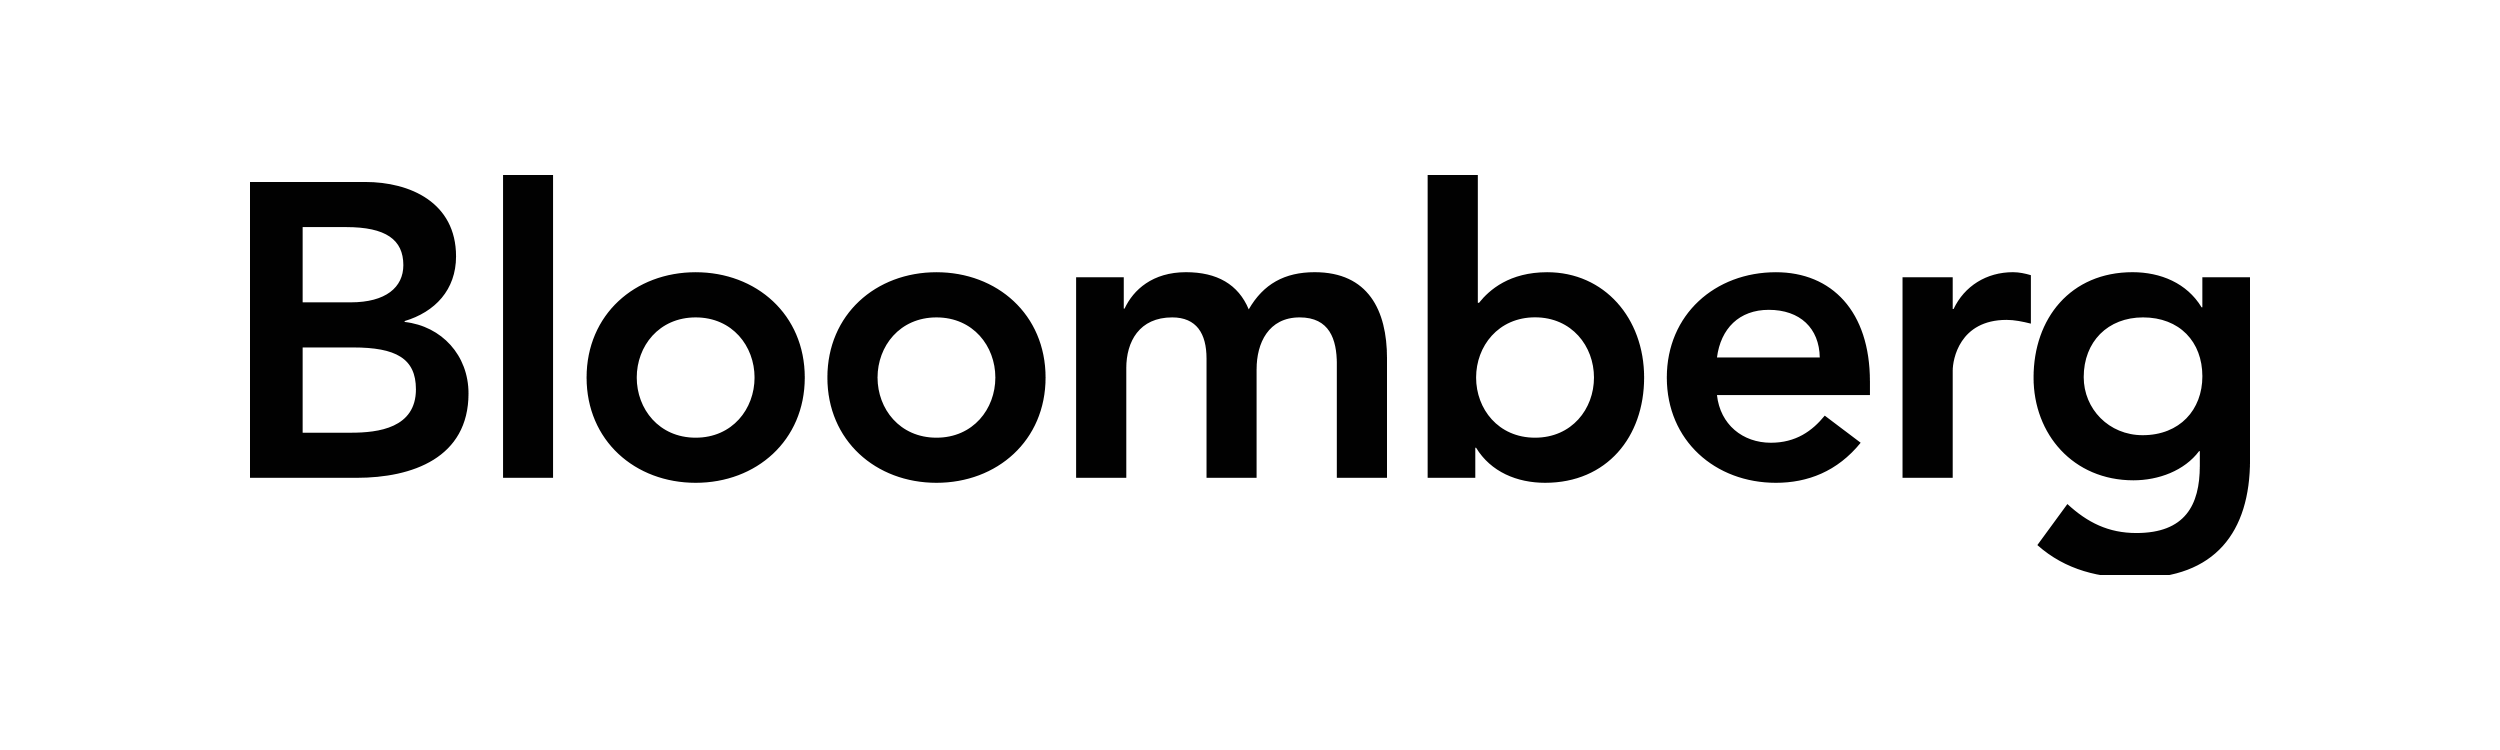 Bloomberg Businessweek Logo, 